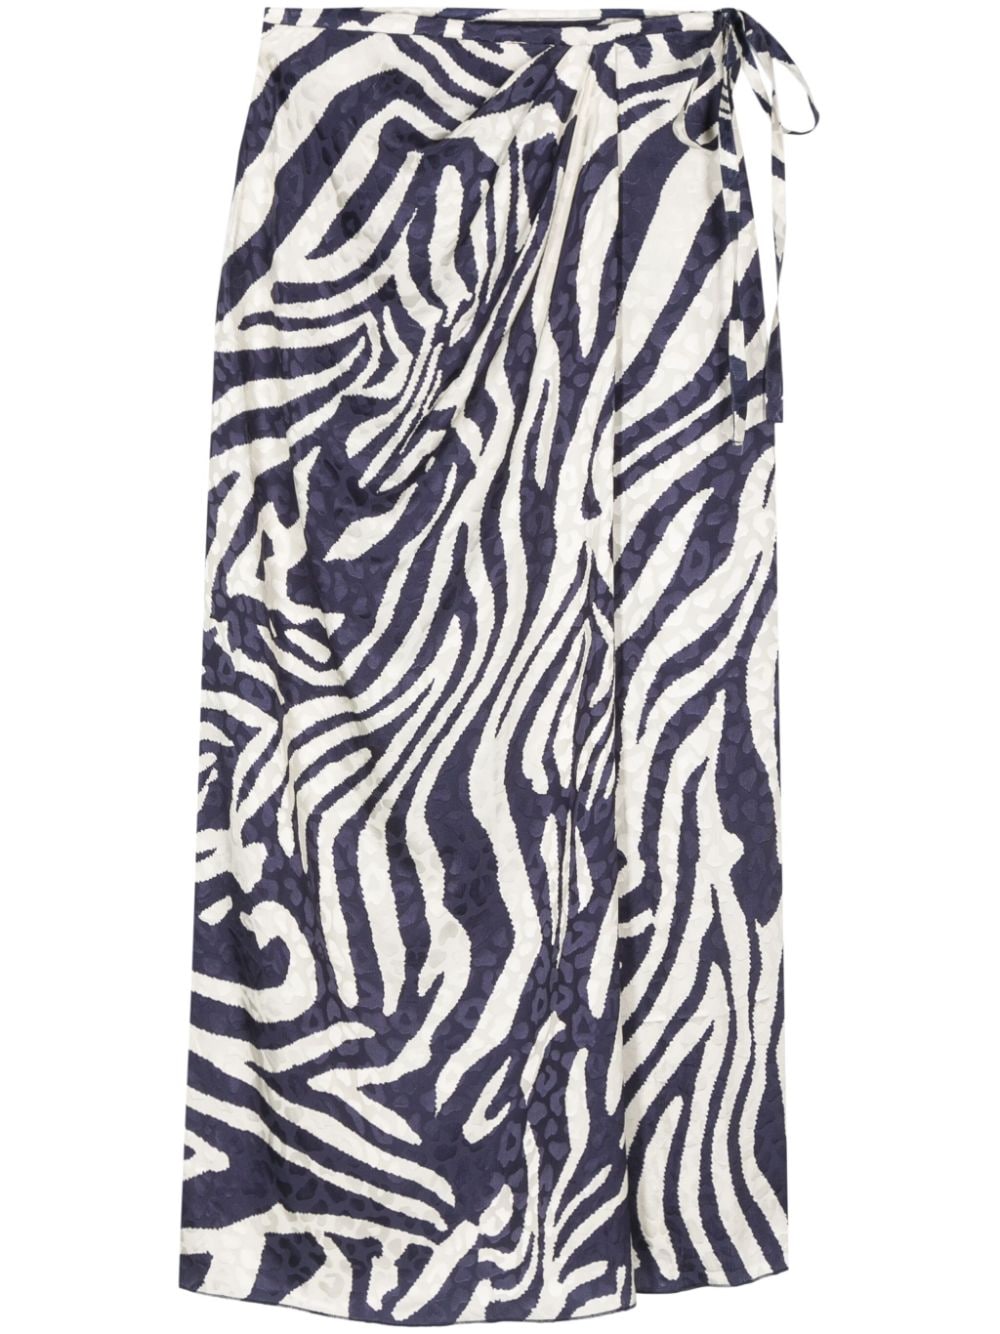 zebra-print satin skirt